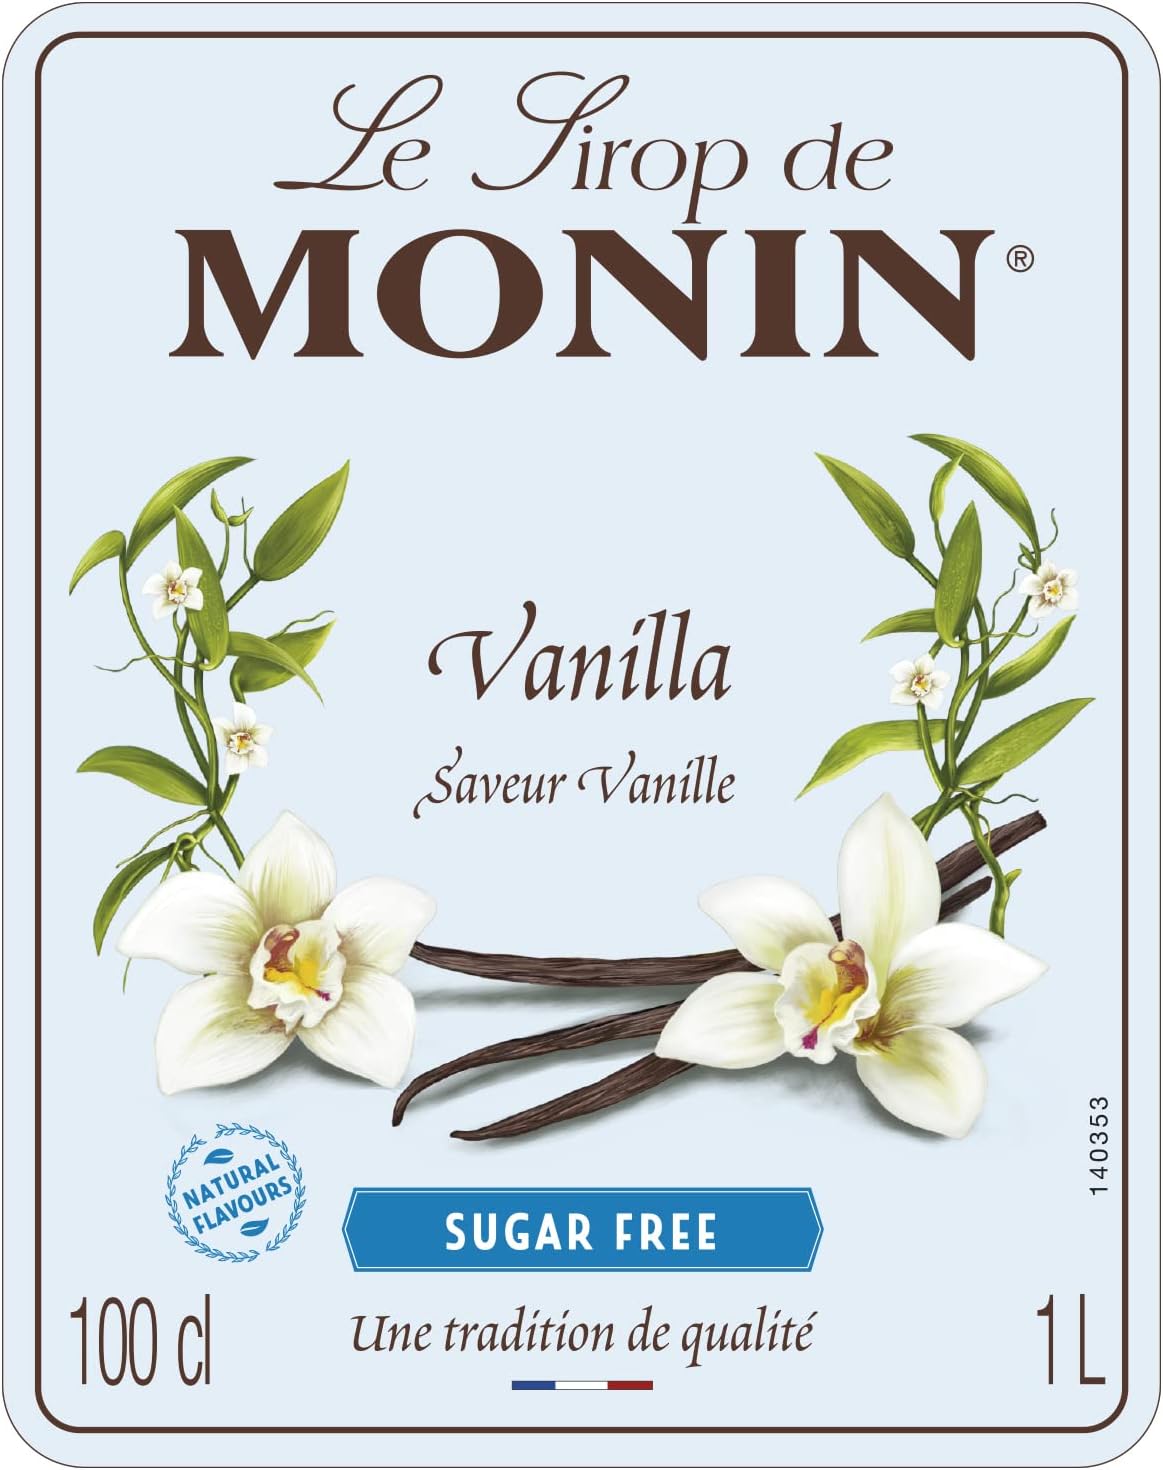 MONIN Premium Vanilla Sugar Free Syrup UK - Review